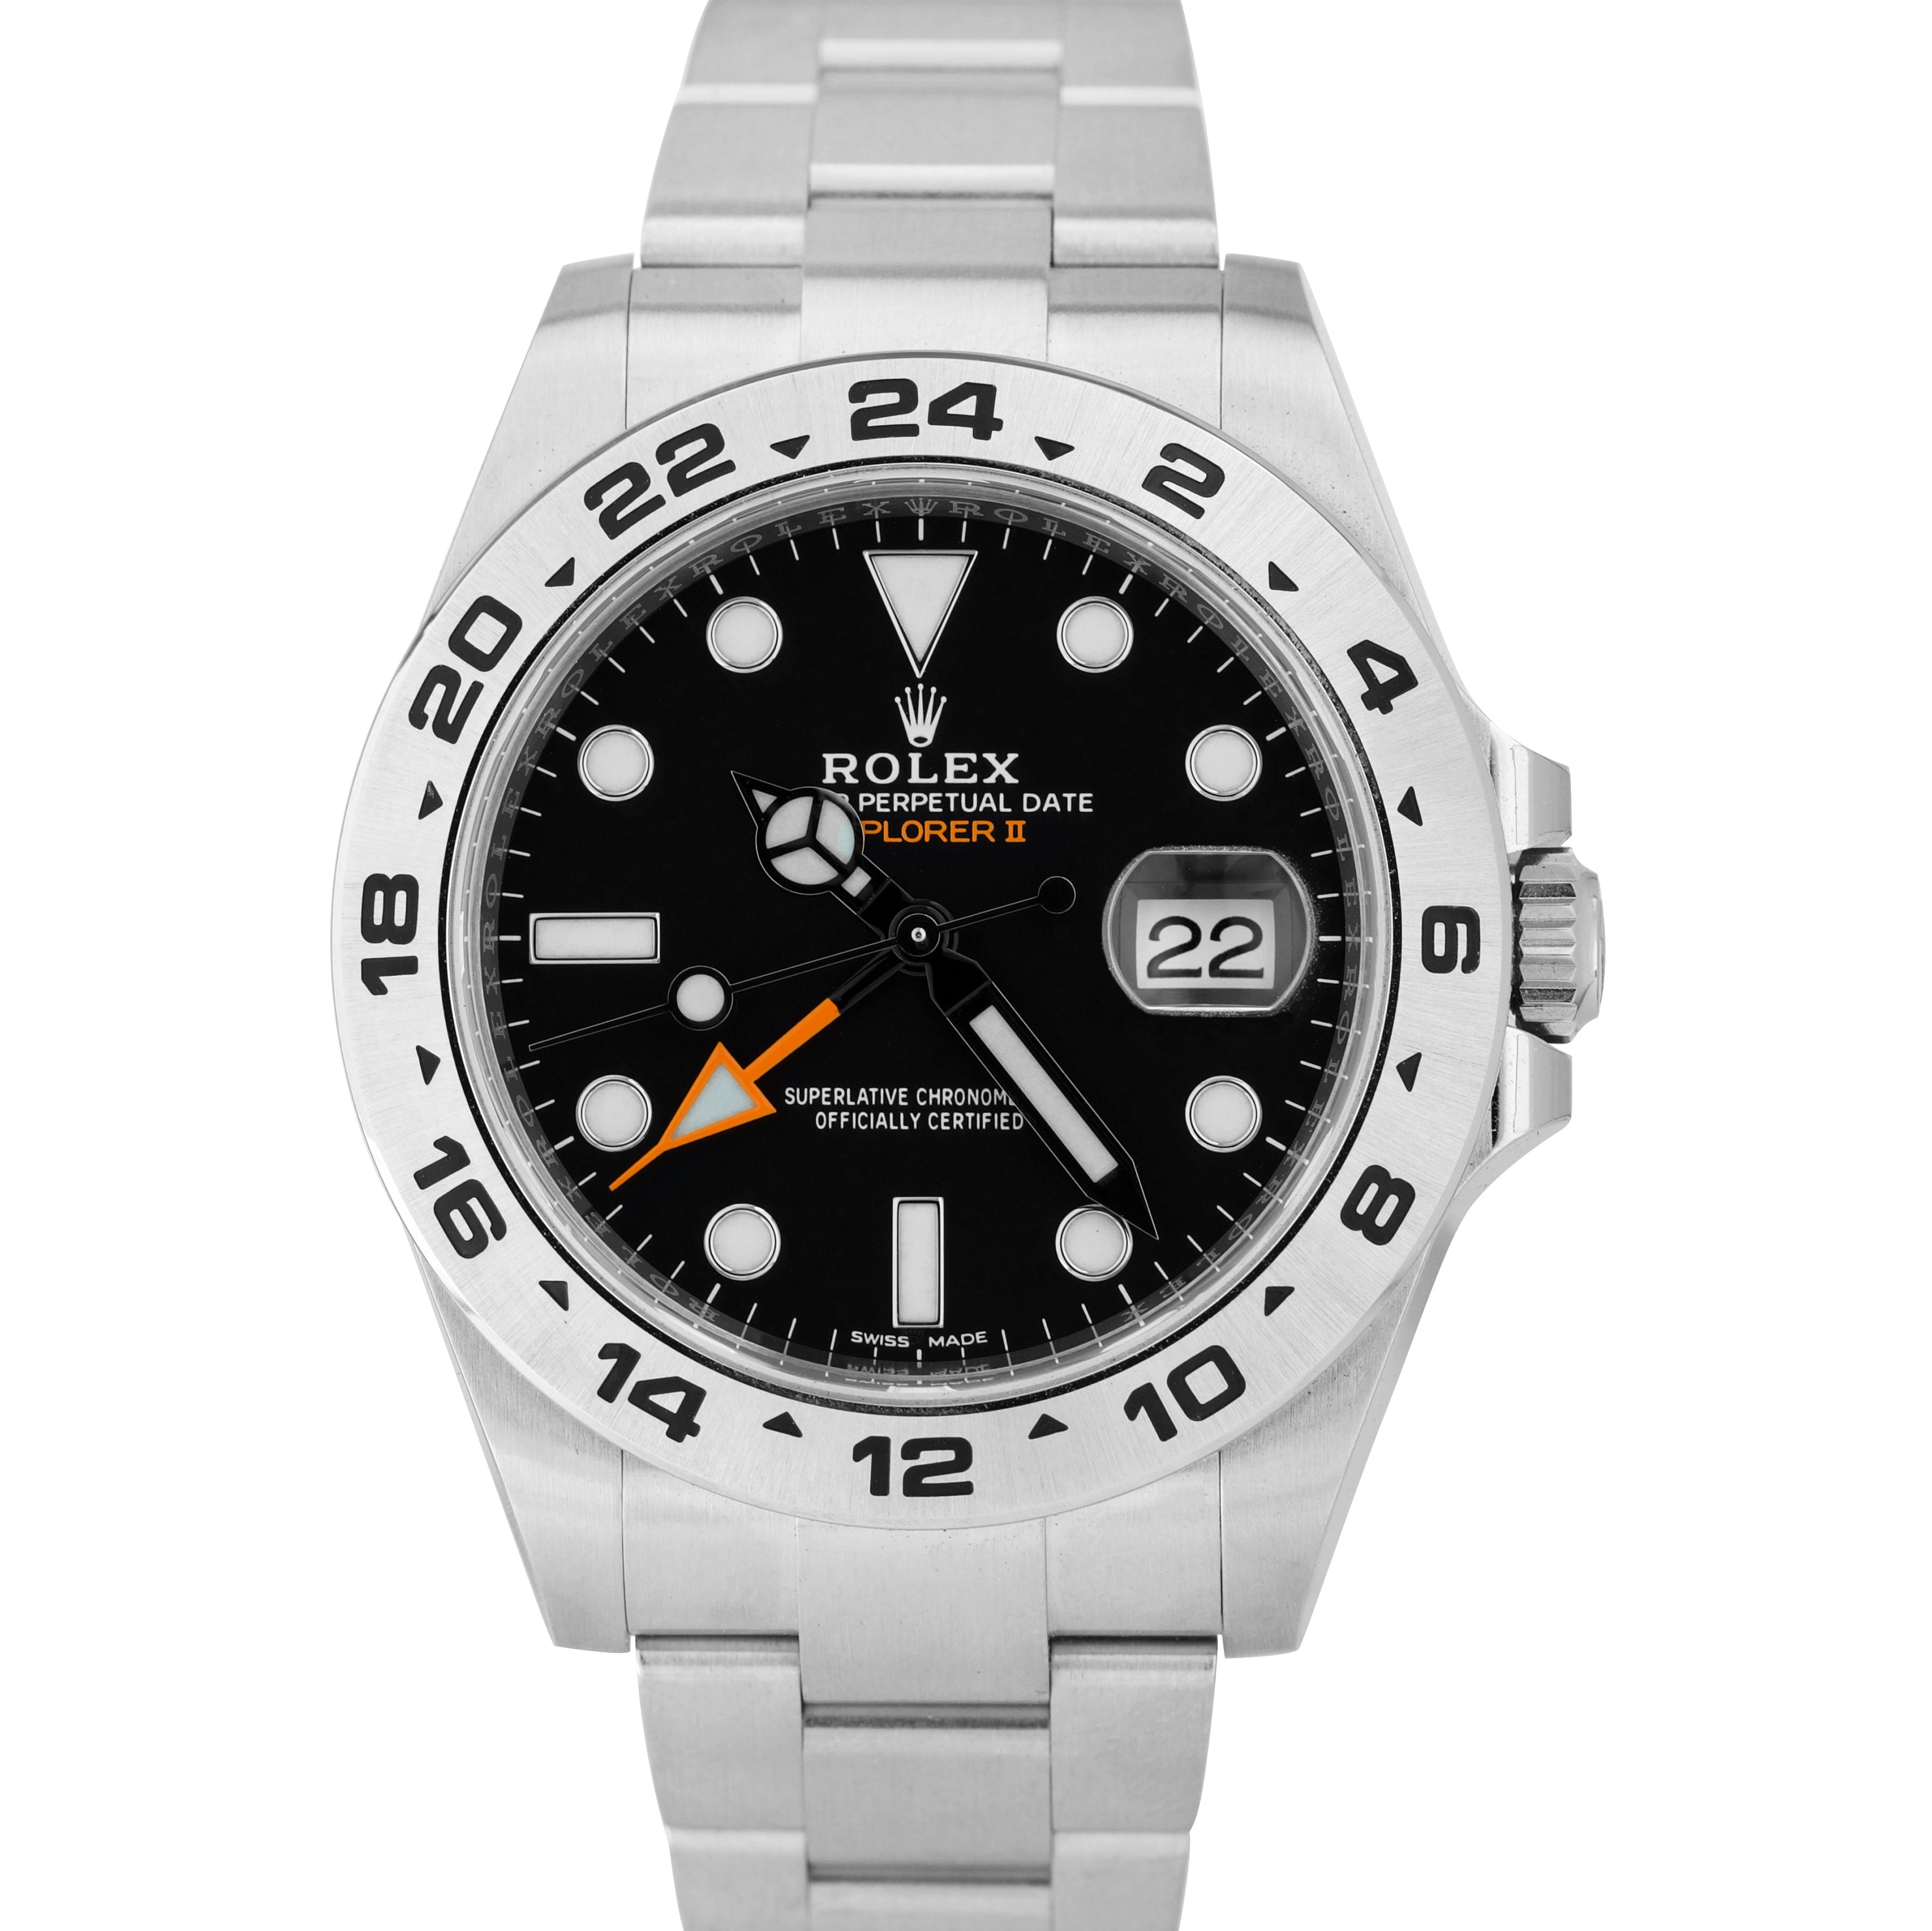 BRAND NEW 2021 Rolex Explorer II 42mm Black Steel Orange GMT Date Watch 216570